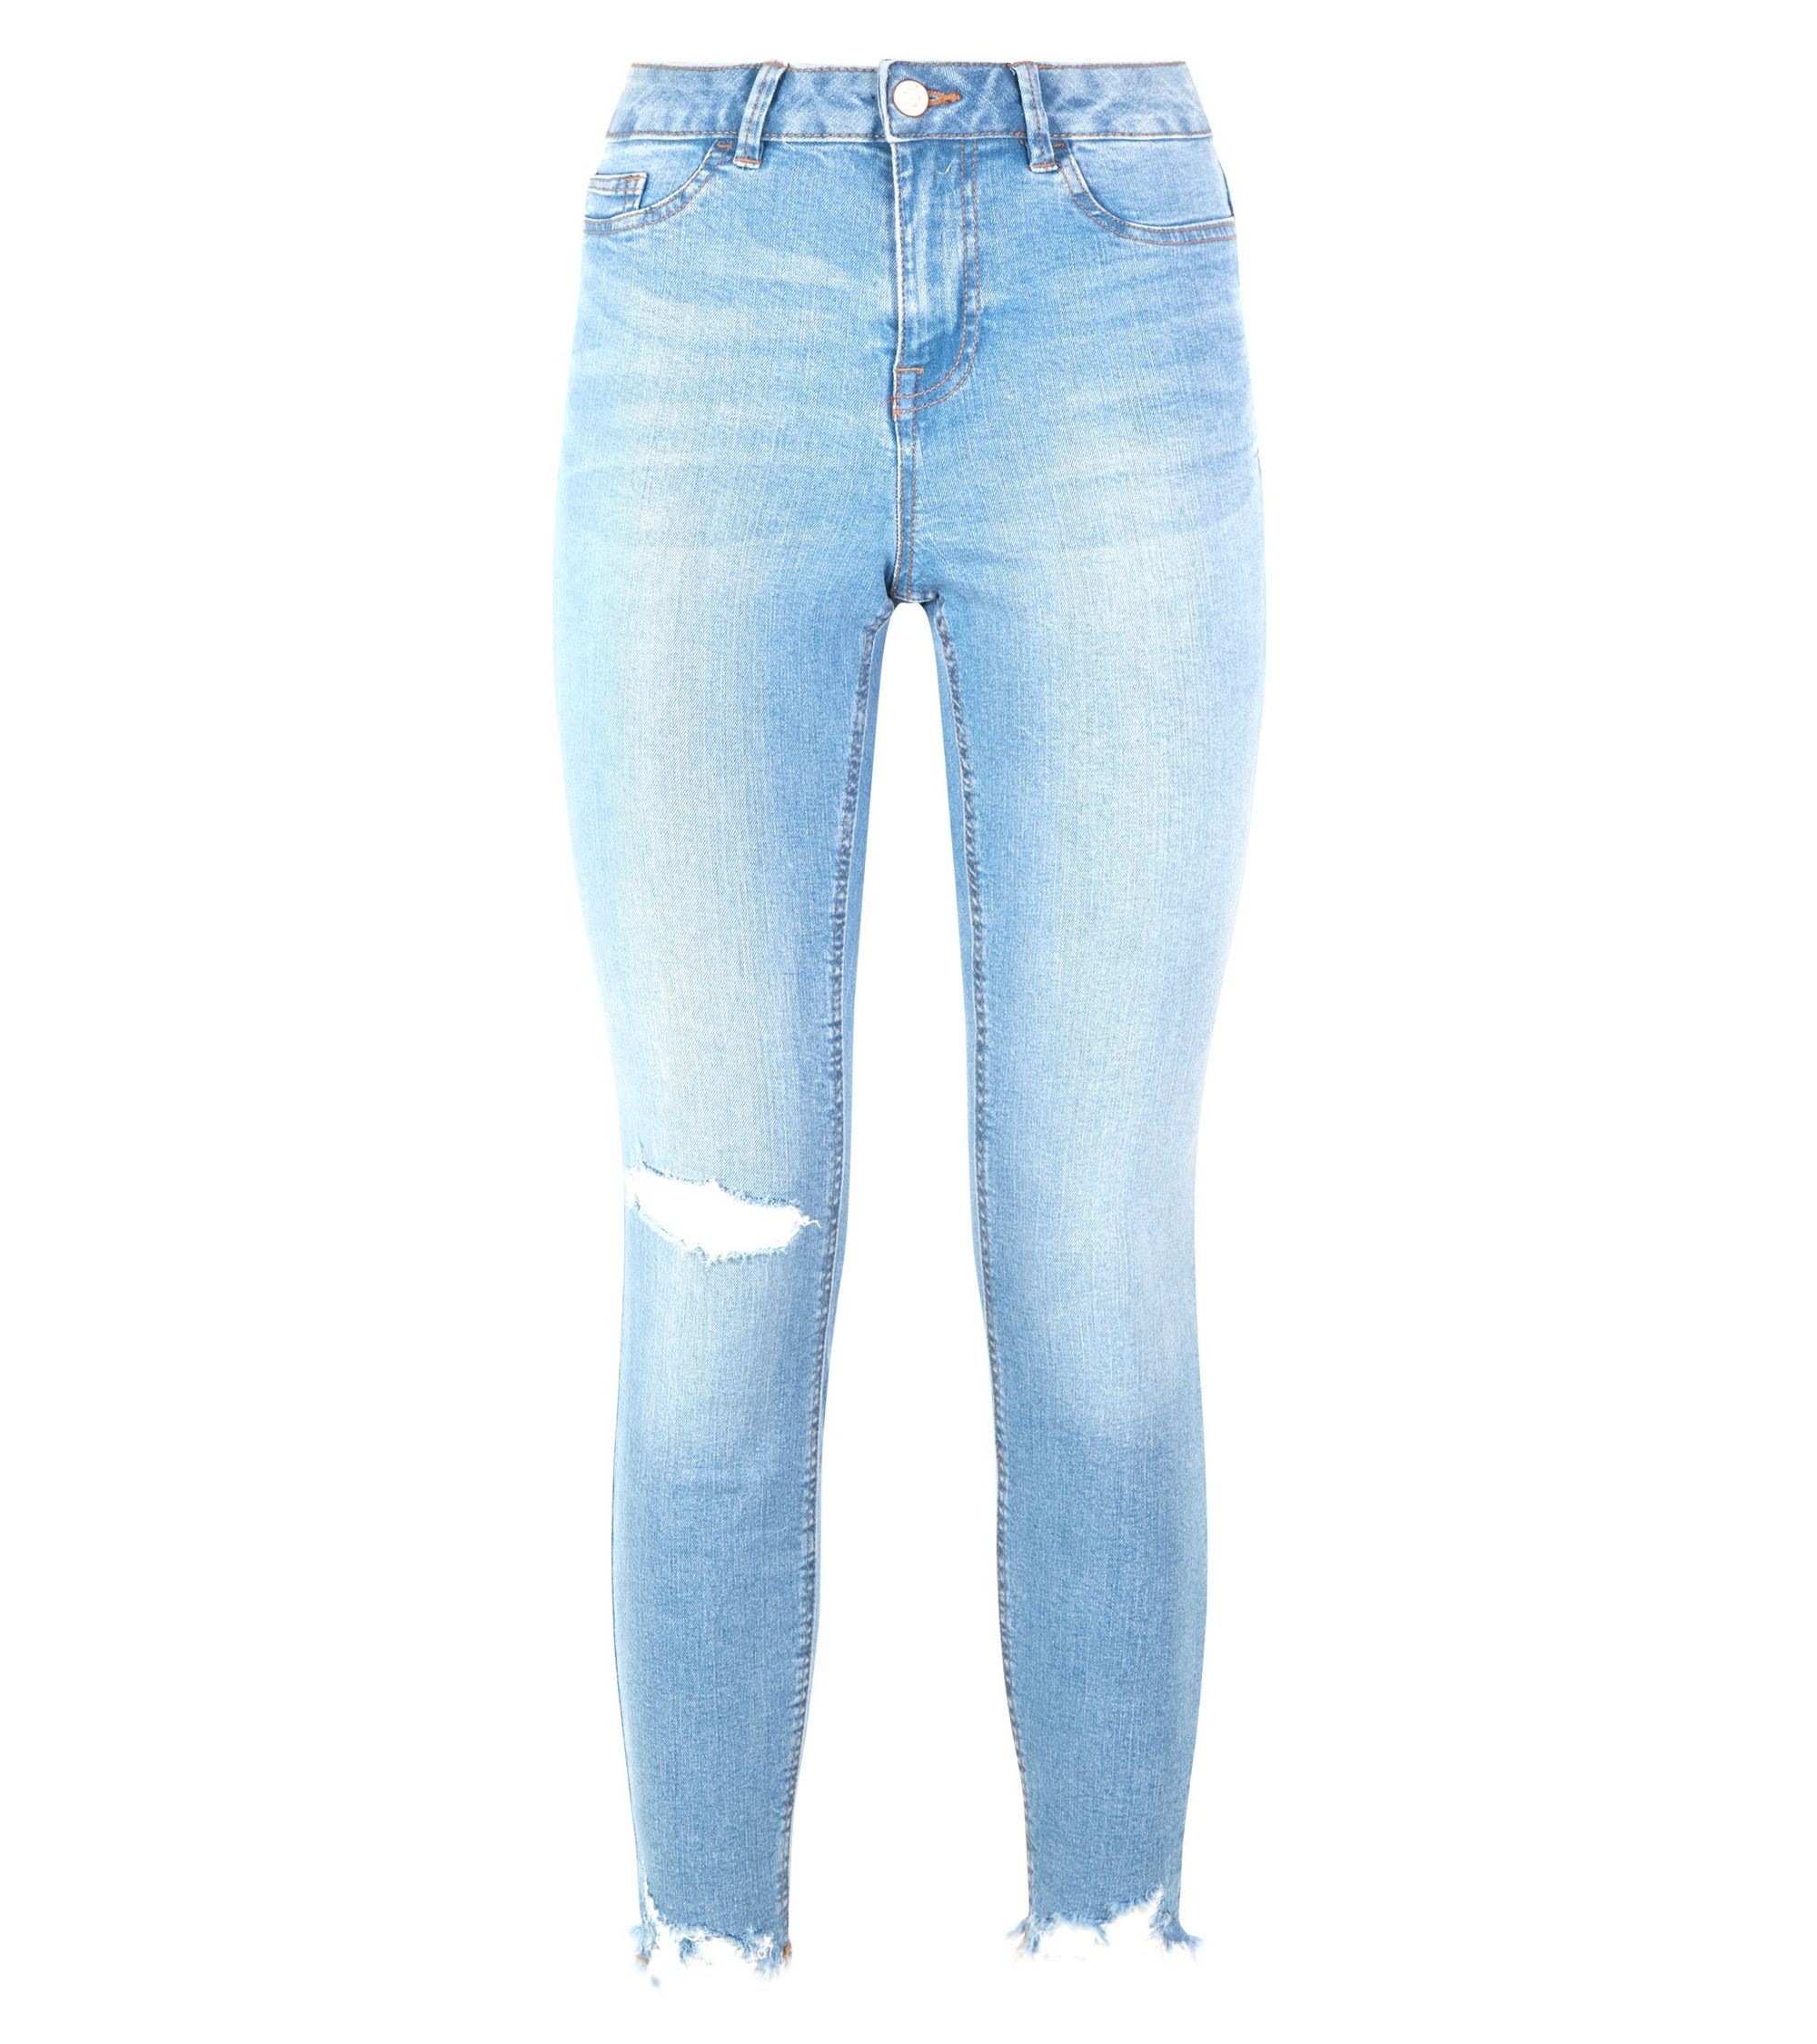 New Look Pale Blue Ripped Fray Hem Skinny Jenna Jeans at £15.99 | love ...